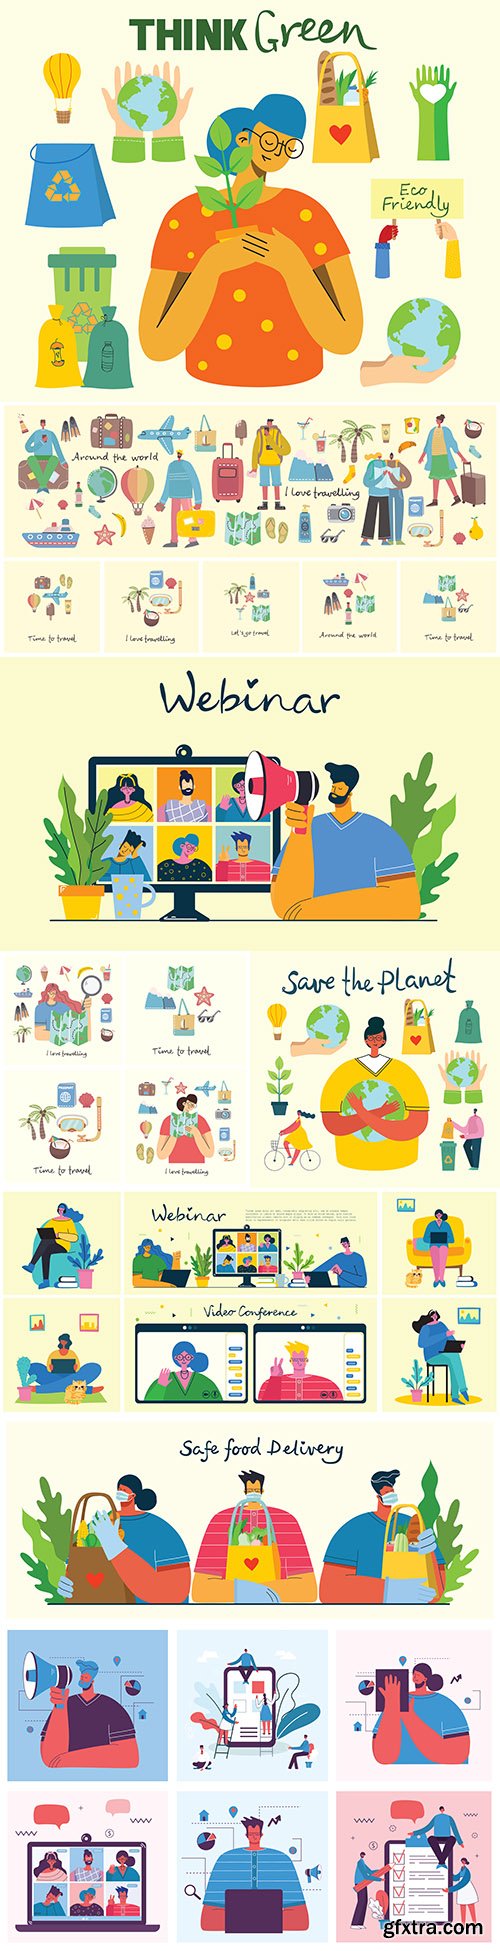 Online webinar concept illustrations and summer holiday journey
